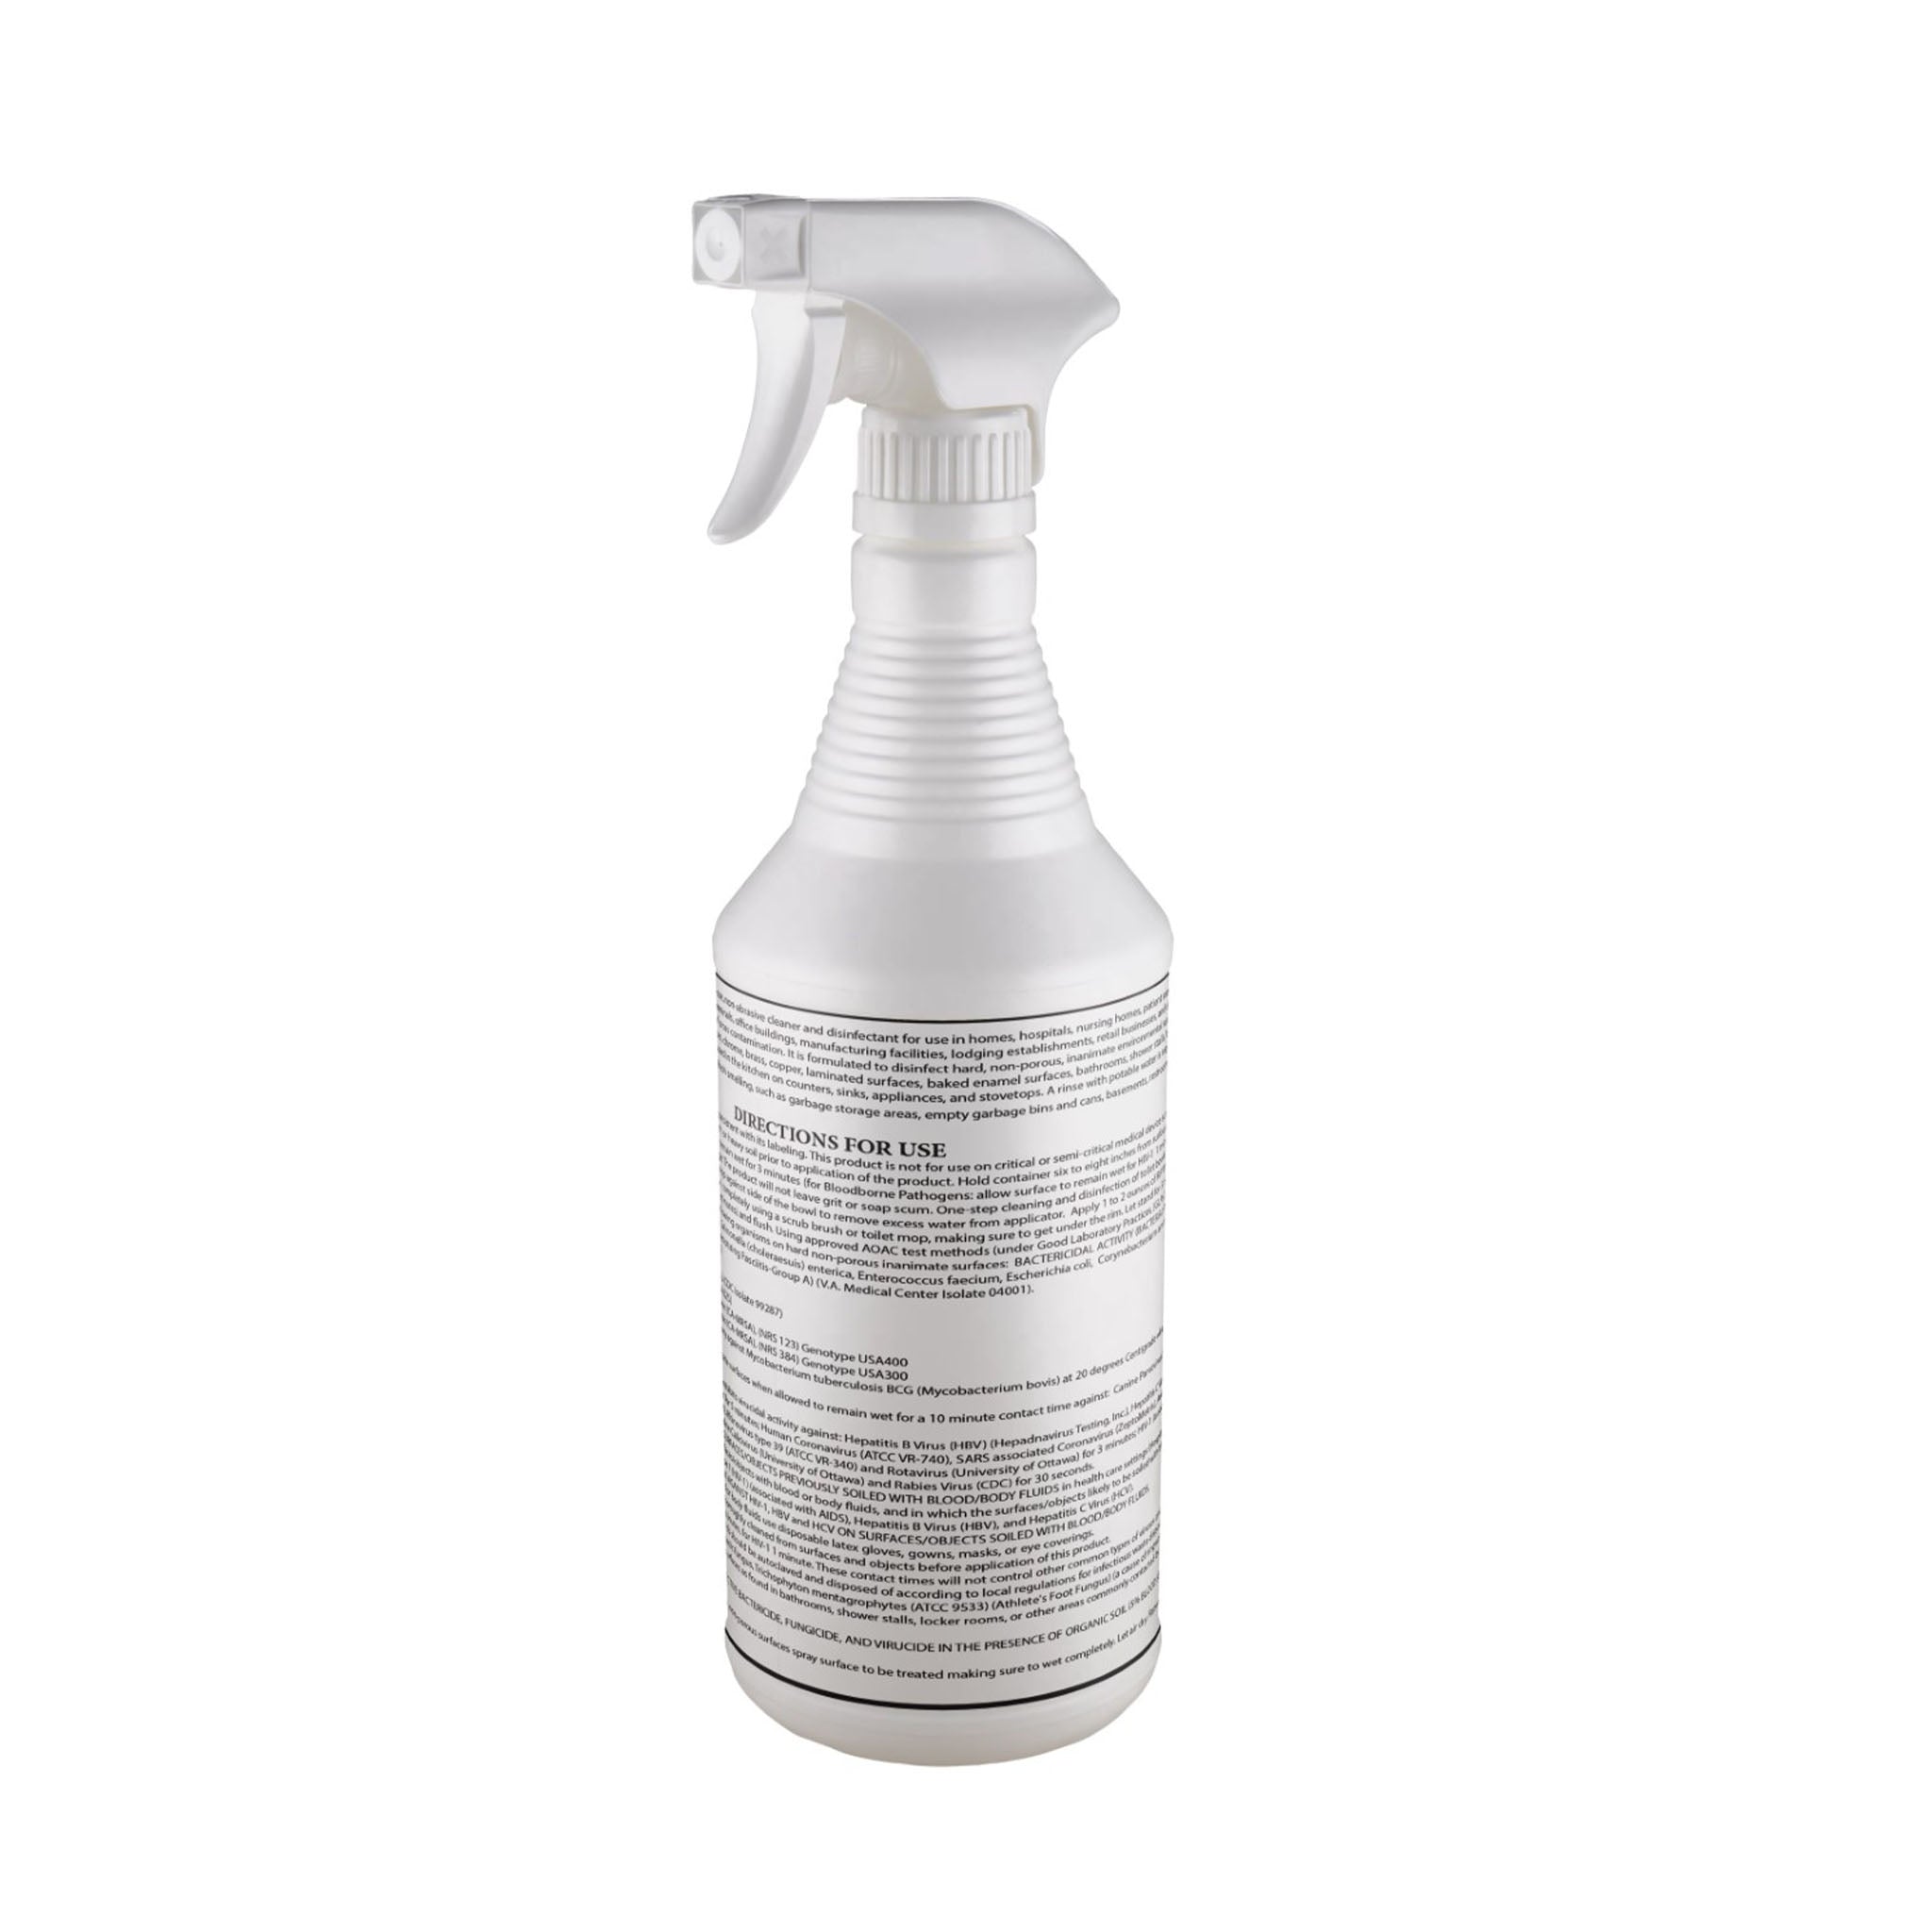 Germ Safe Disinfectant, Cleaner, Spray 32 oz.